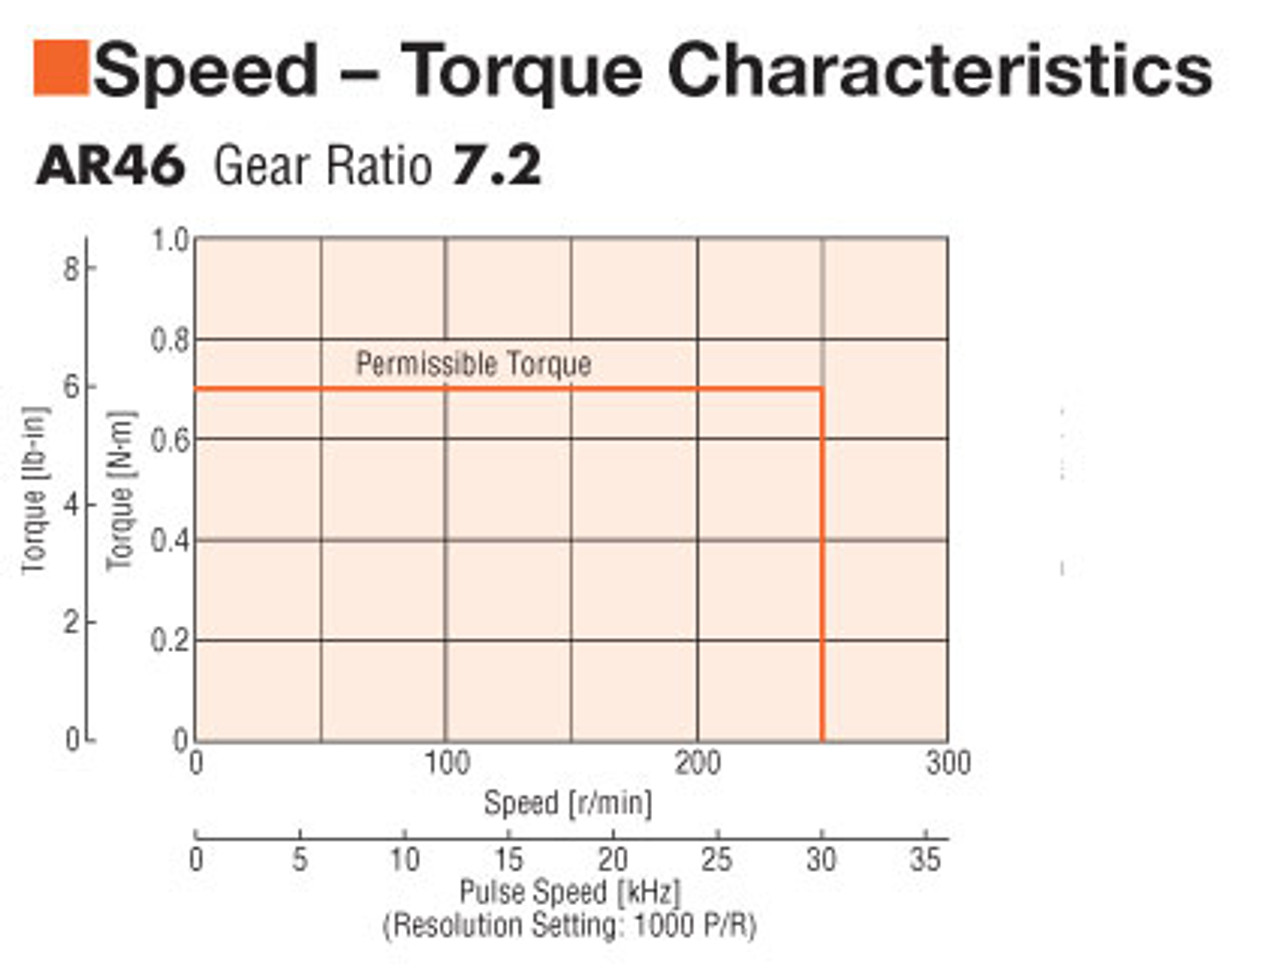 ARM46MC-T7.2 - Speed-Torque